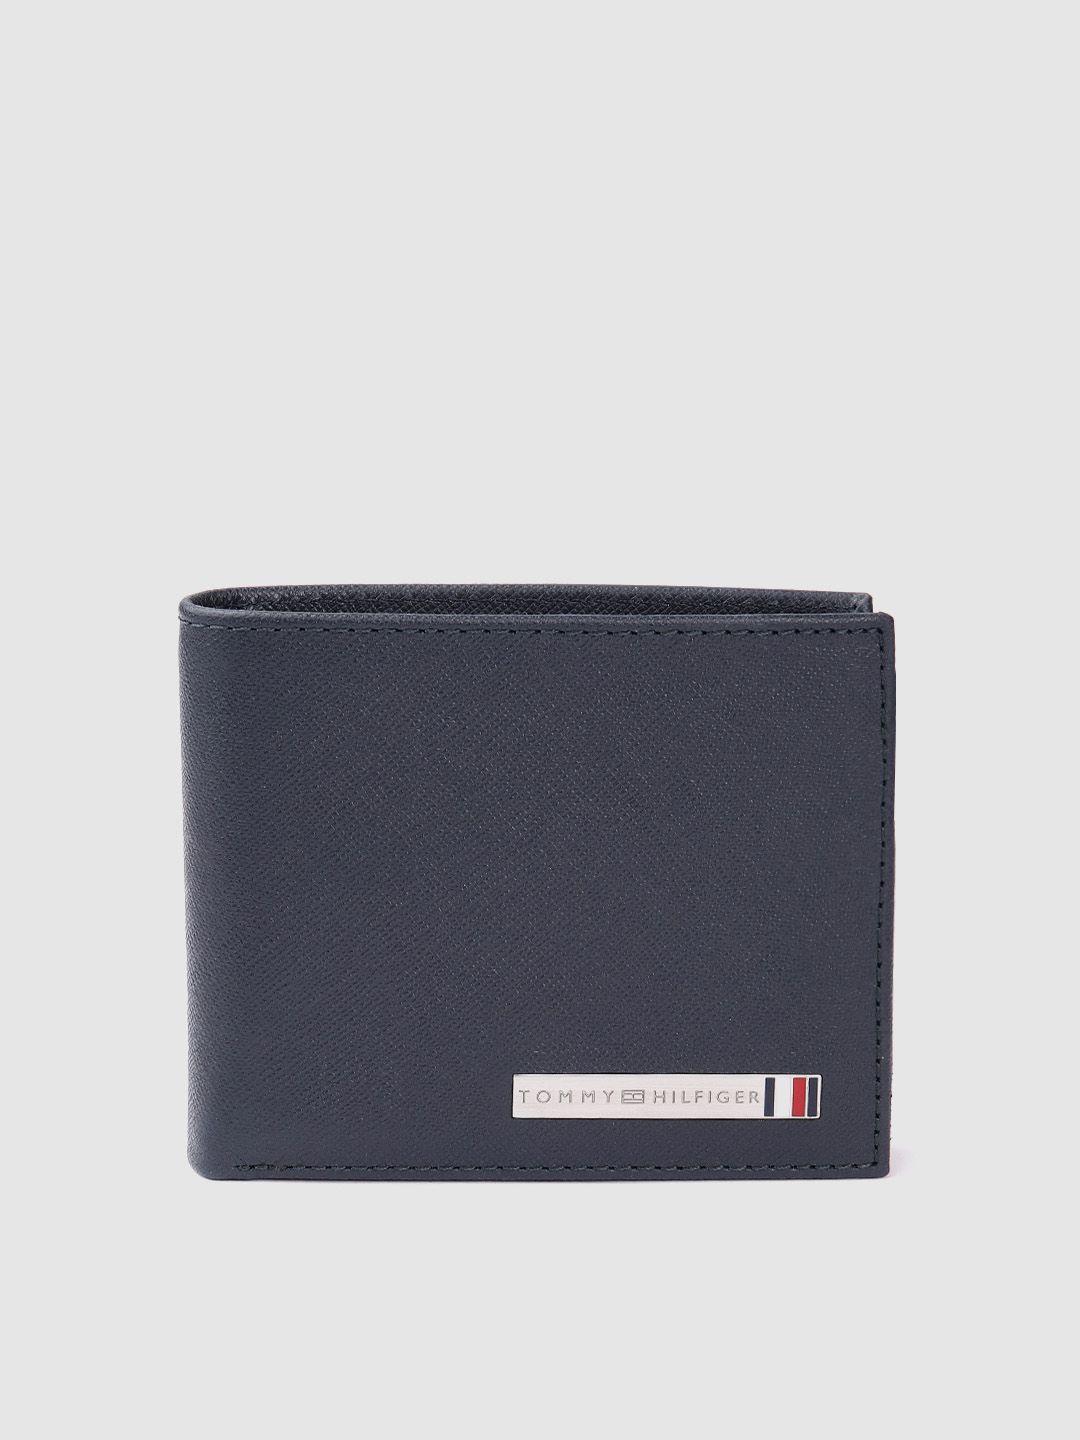 tommy hilfiger men navy blue leather two fold wallet